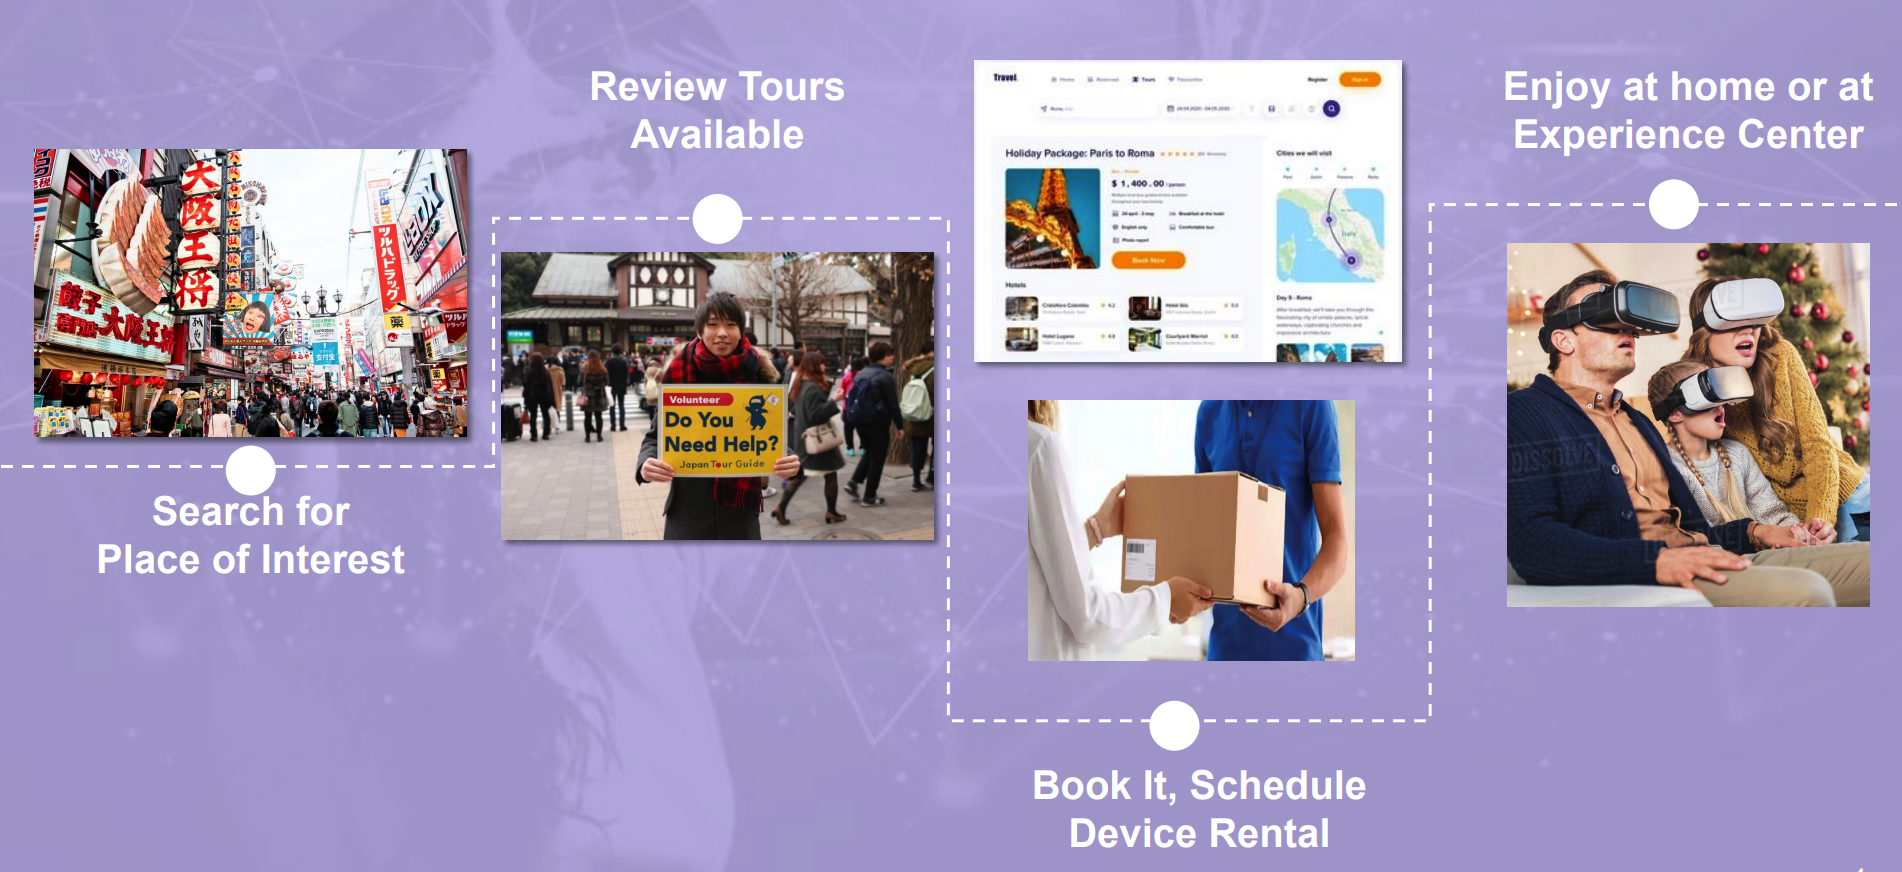 Flowchart outlining a tourist's experience using V-Tour, a VR tourism platform.